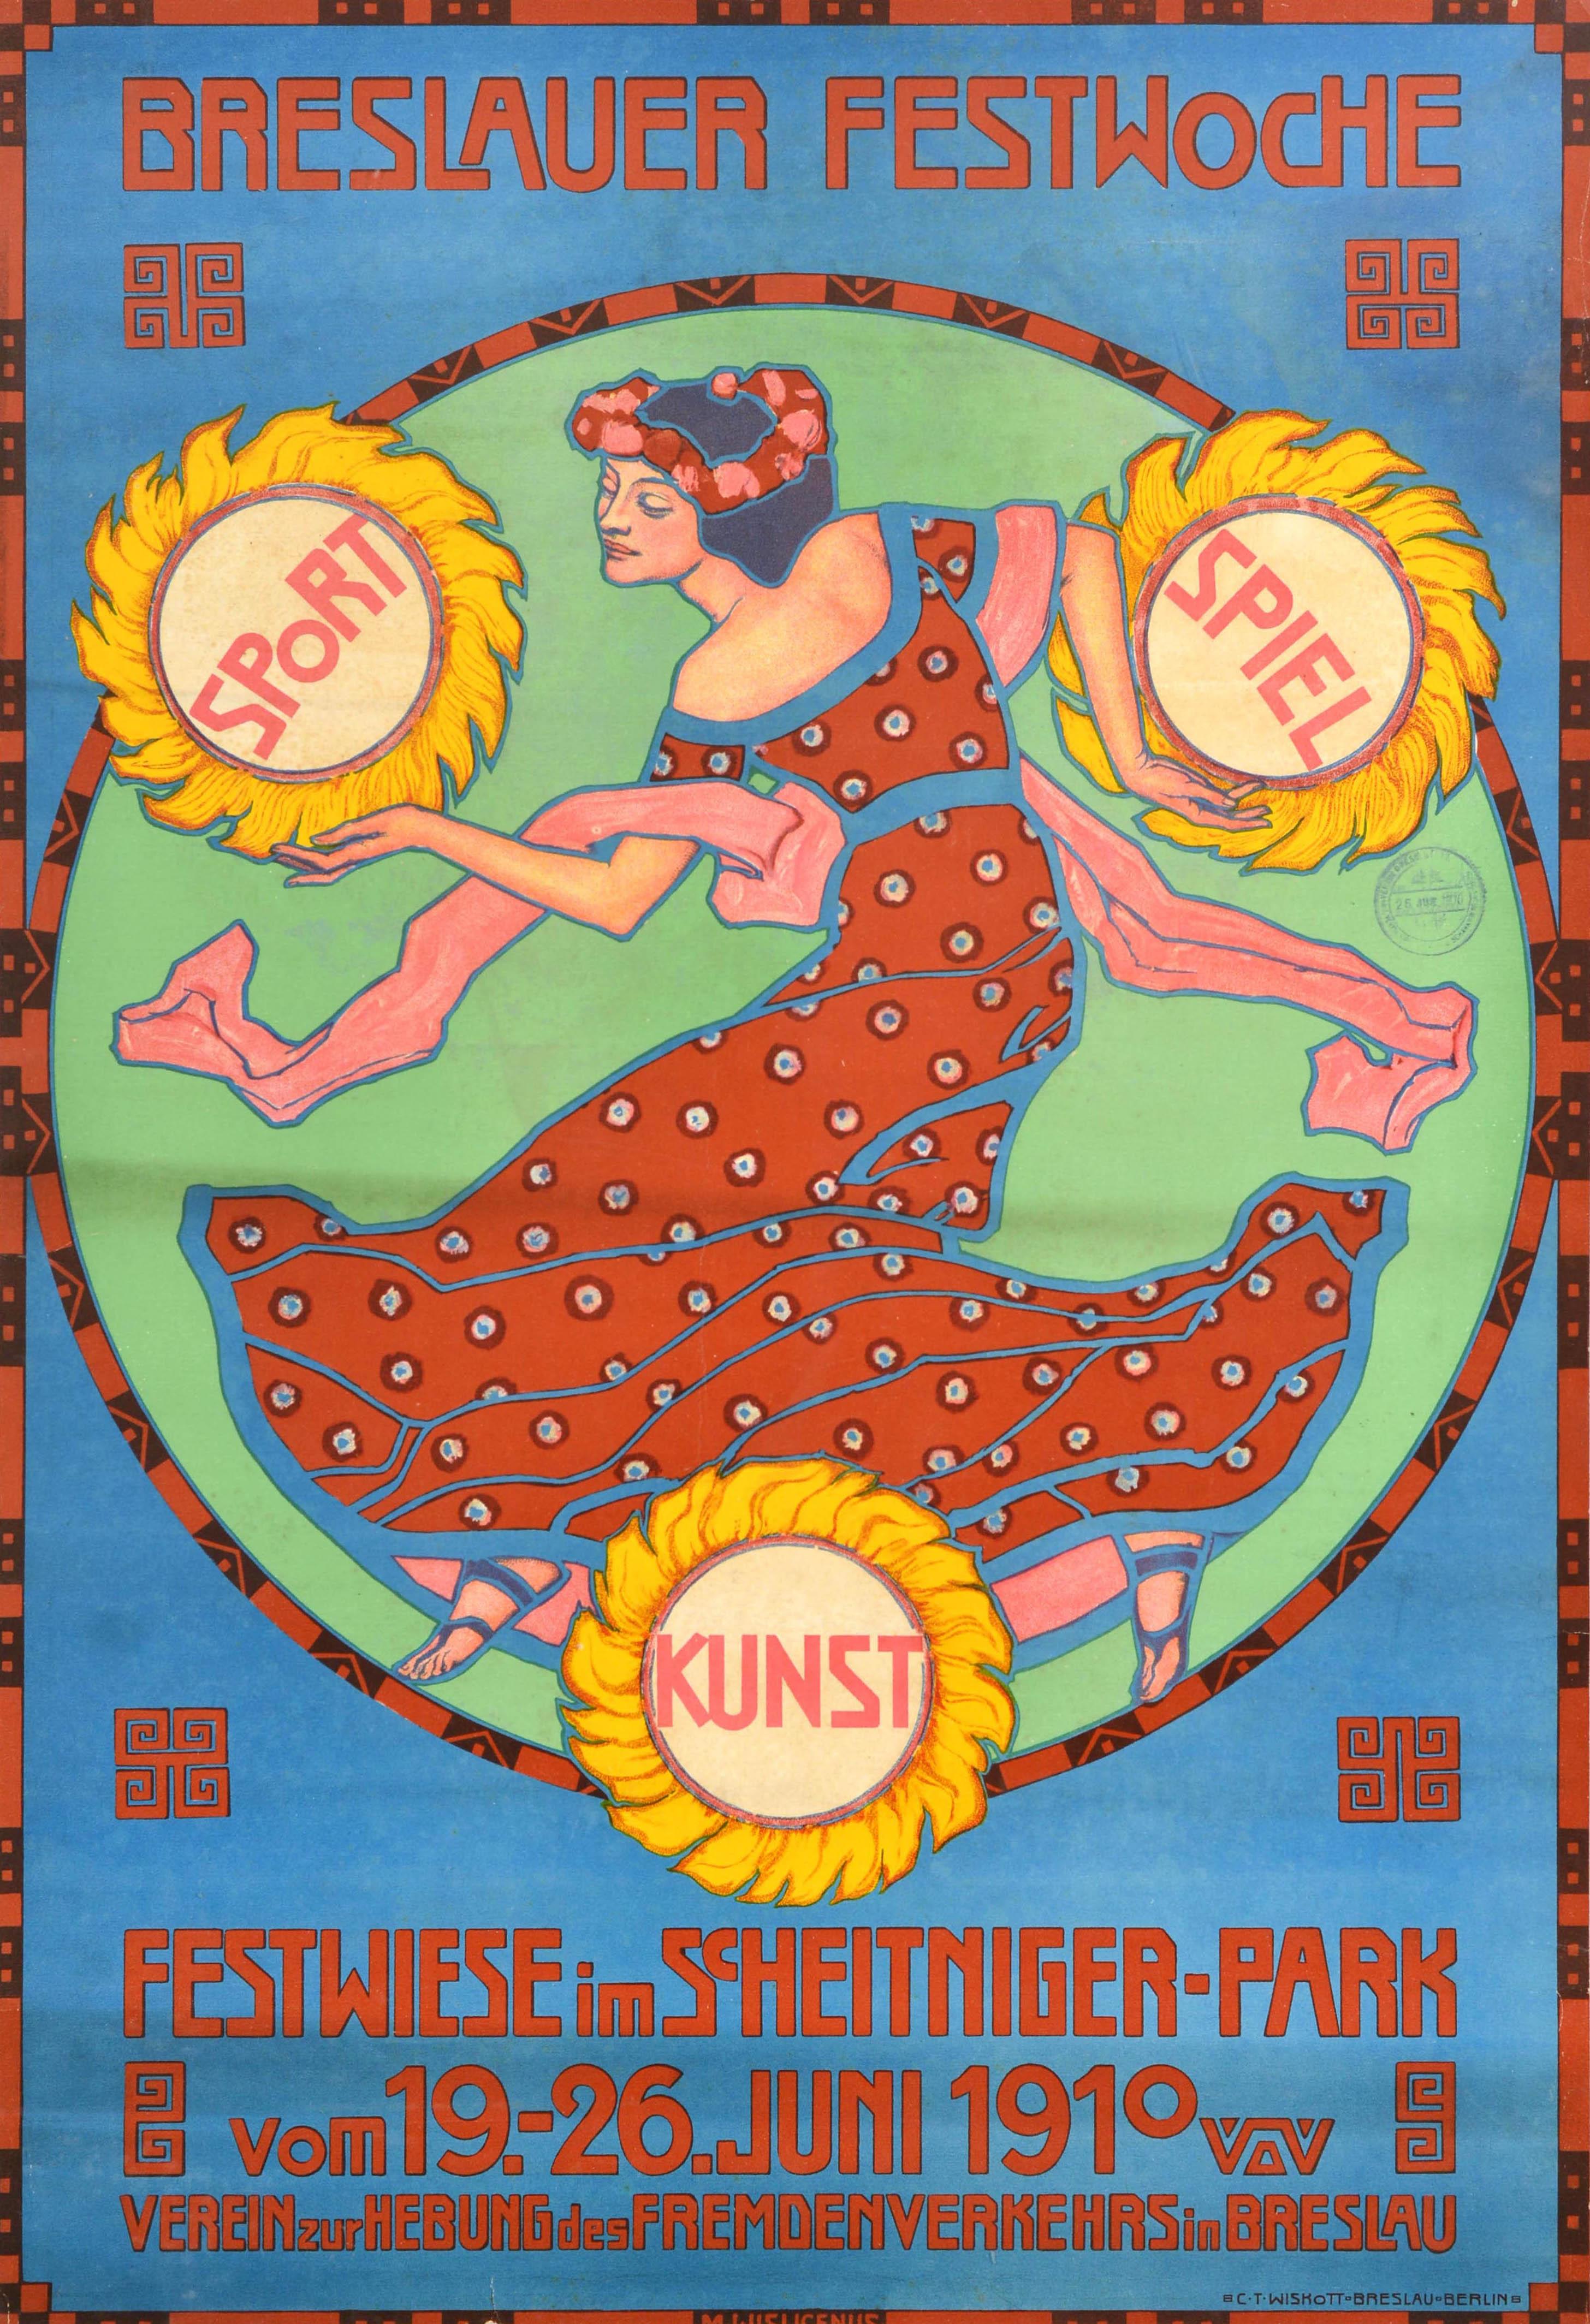 Original Antique Advertising Poster Wroclaw Festival Week Breslauer Festwoche